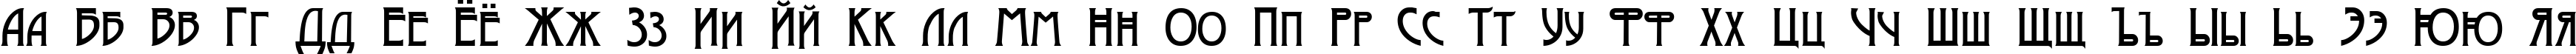 Пример написания русского алфавита шрифтом Moderno One